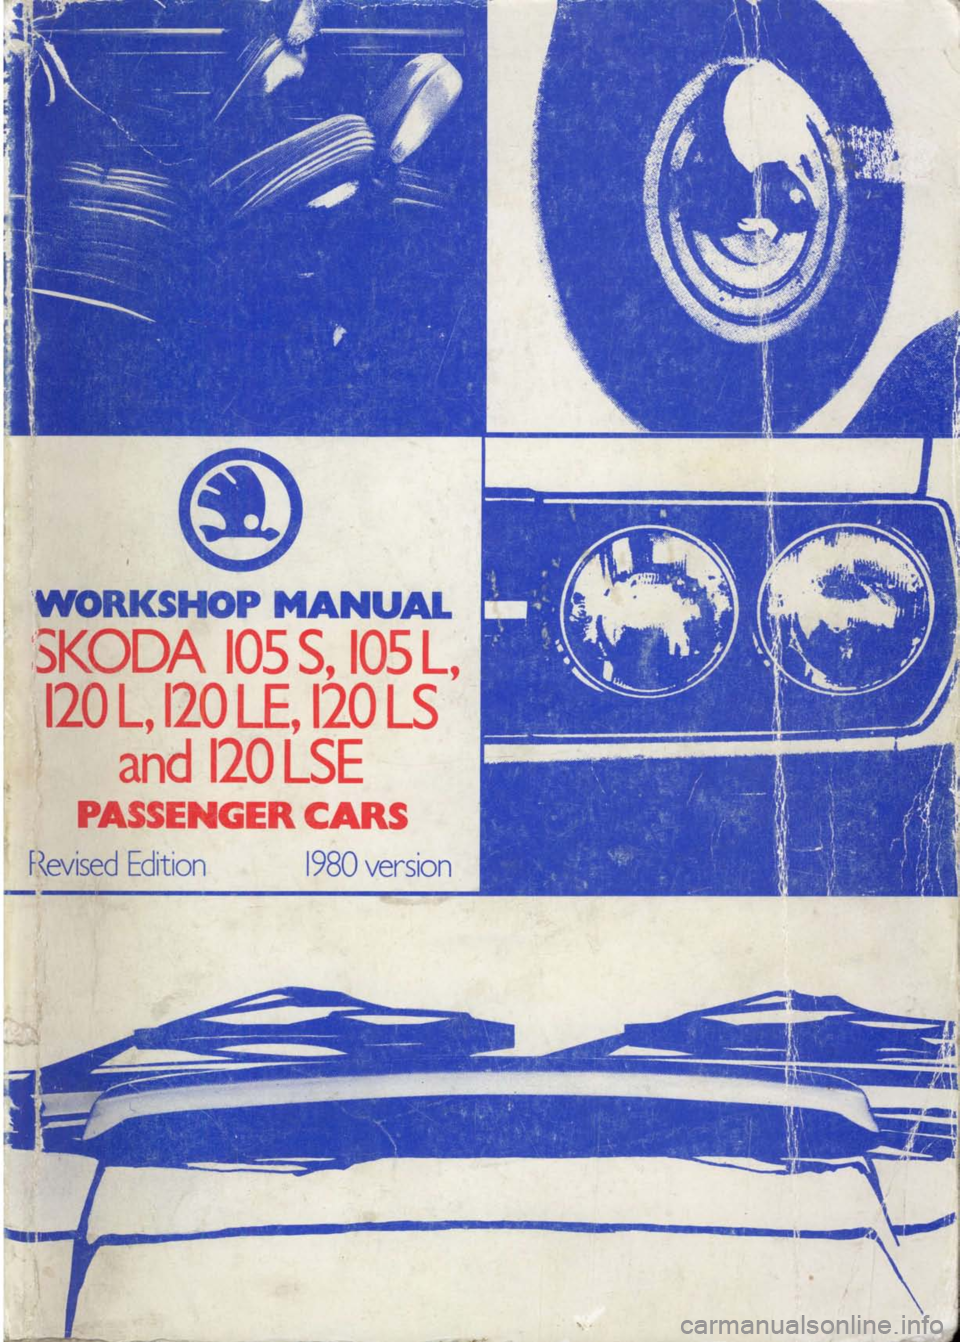 SKODA 105S 1980  Workshop Manual , 
WORKSHOP 
}IANUAL
;sl(oDA  t05s, t05  1,
120 L,  120 
LE, 120  LS
and  120 
LsE
PASSENGERCARS
F{evised  Edition  l9B0  version
- 